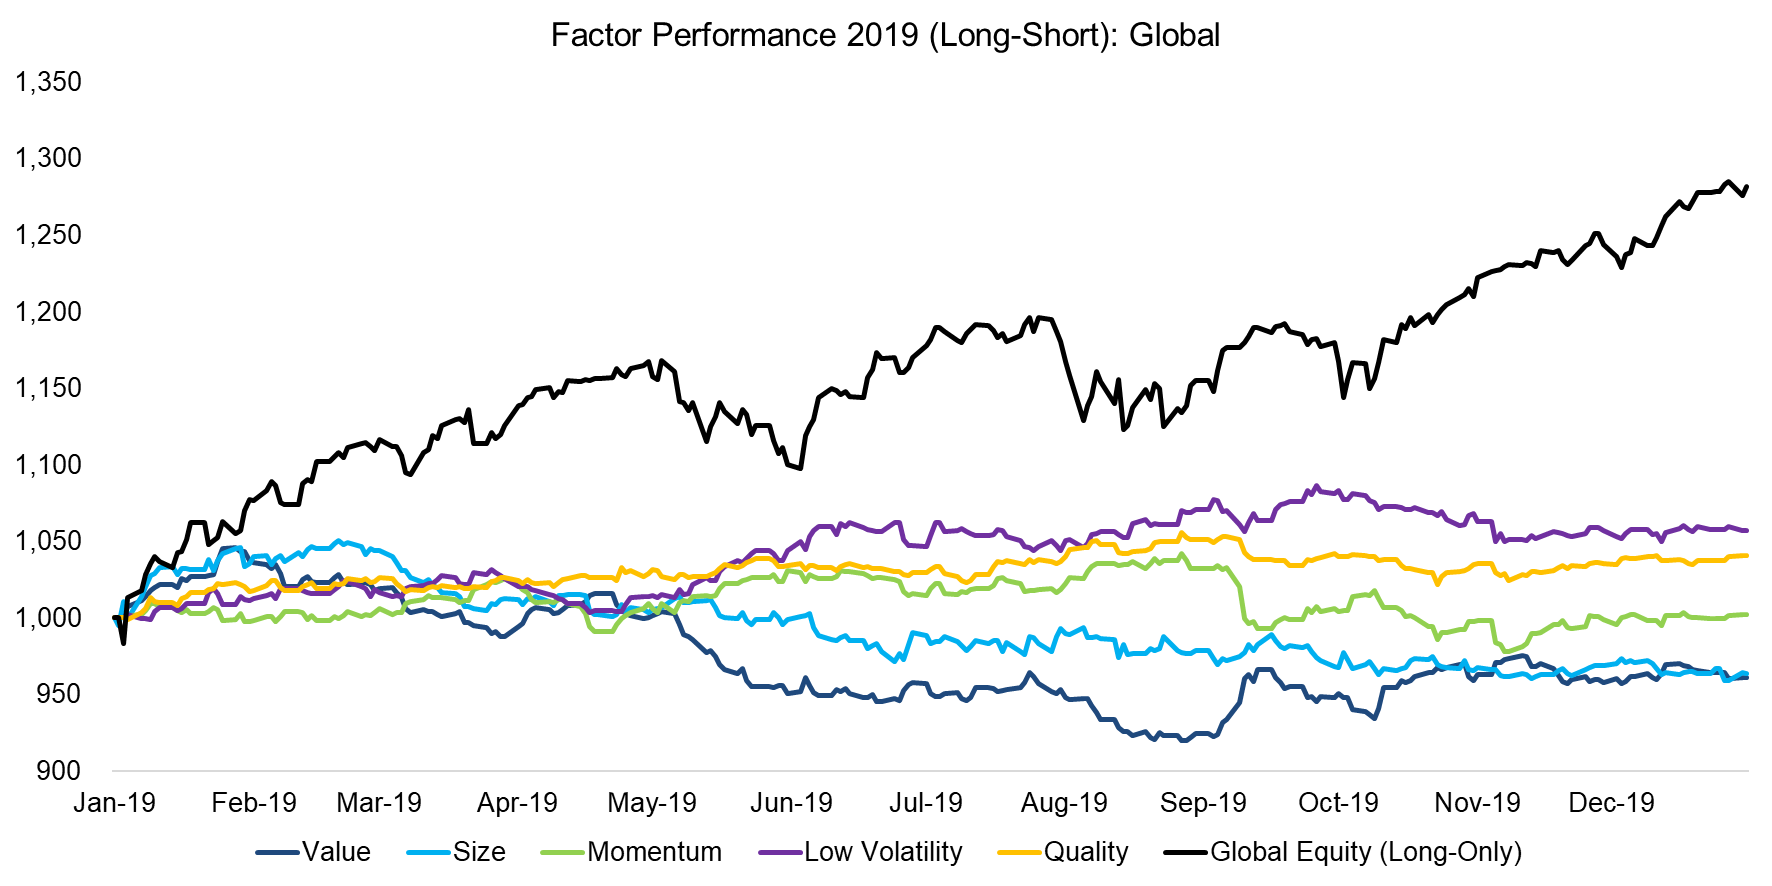 Factor Performance 2019 (Long-Short) Global